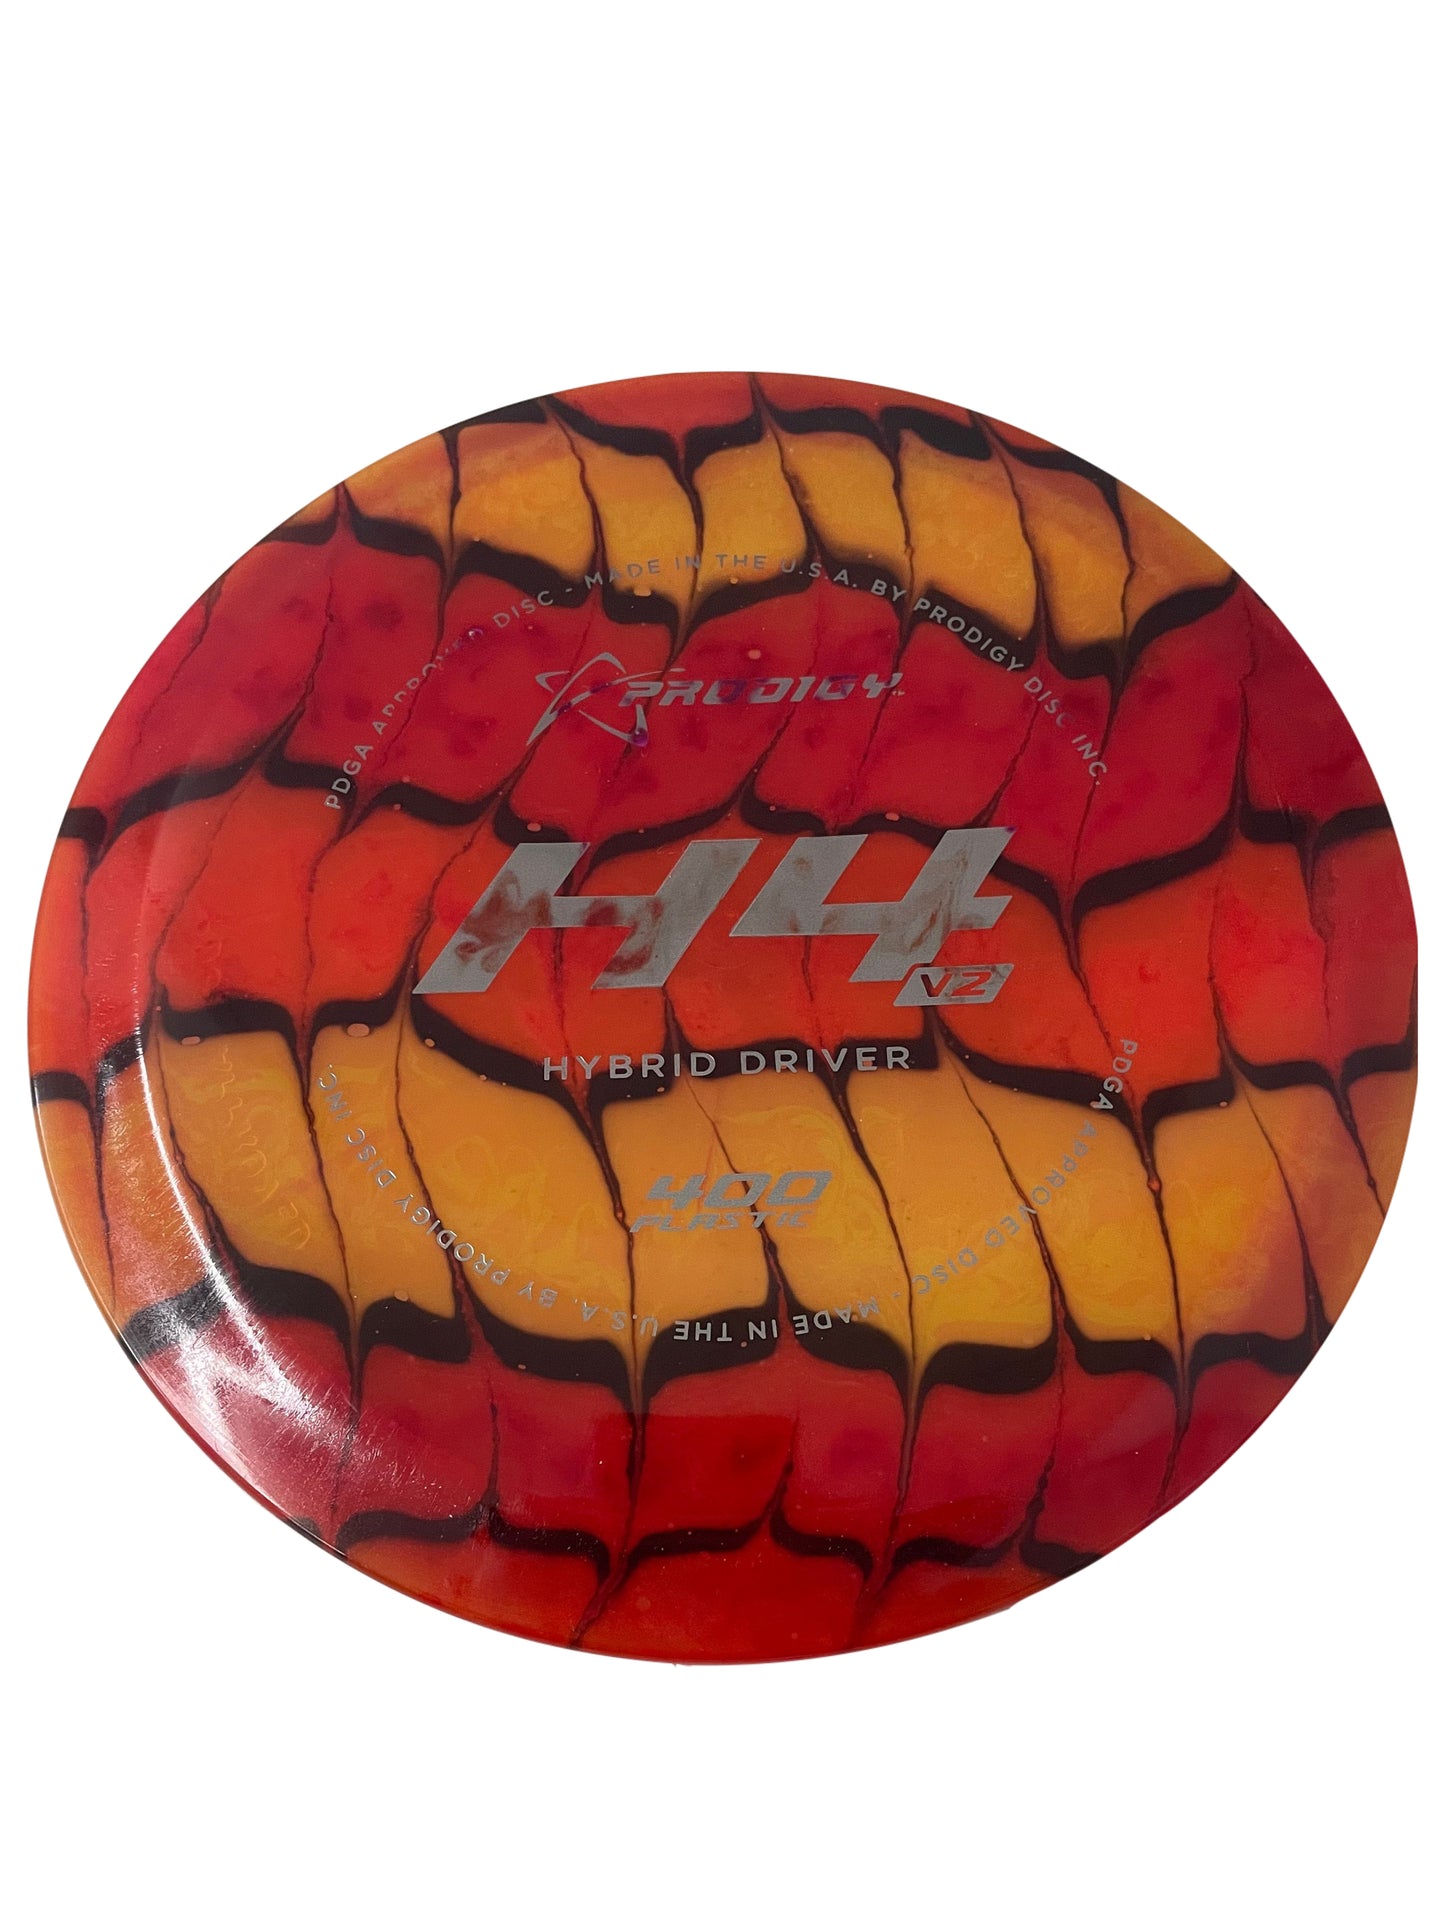 Skyhyzerdye Custom Art Disc